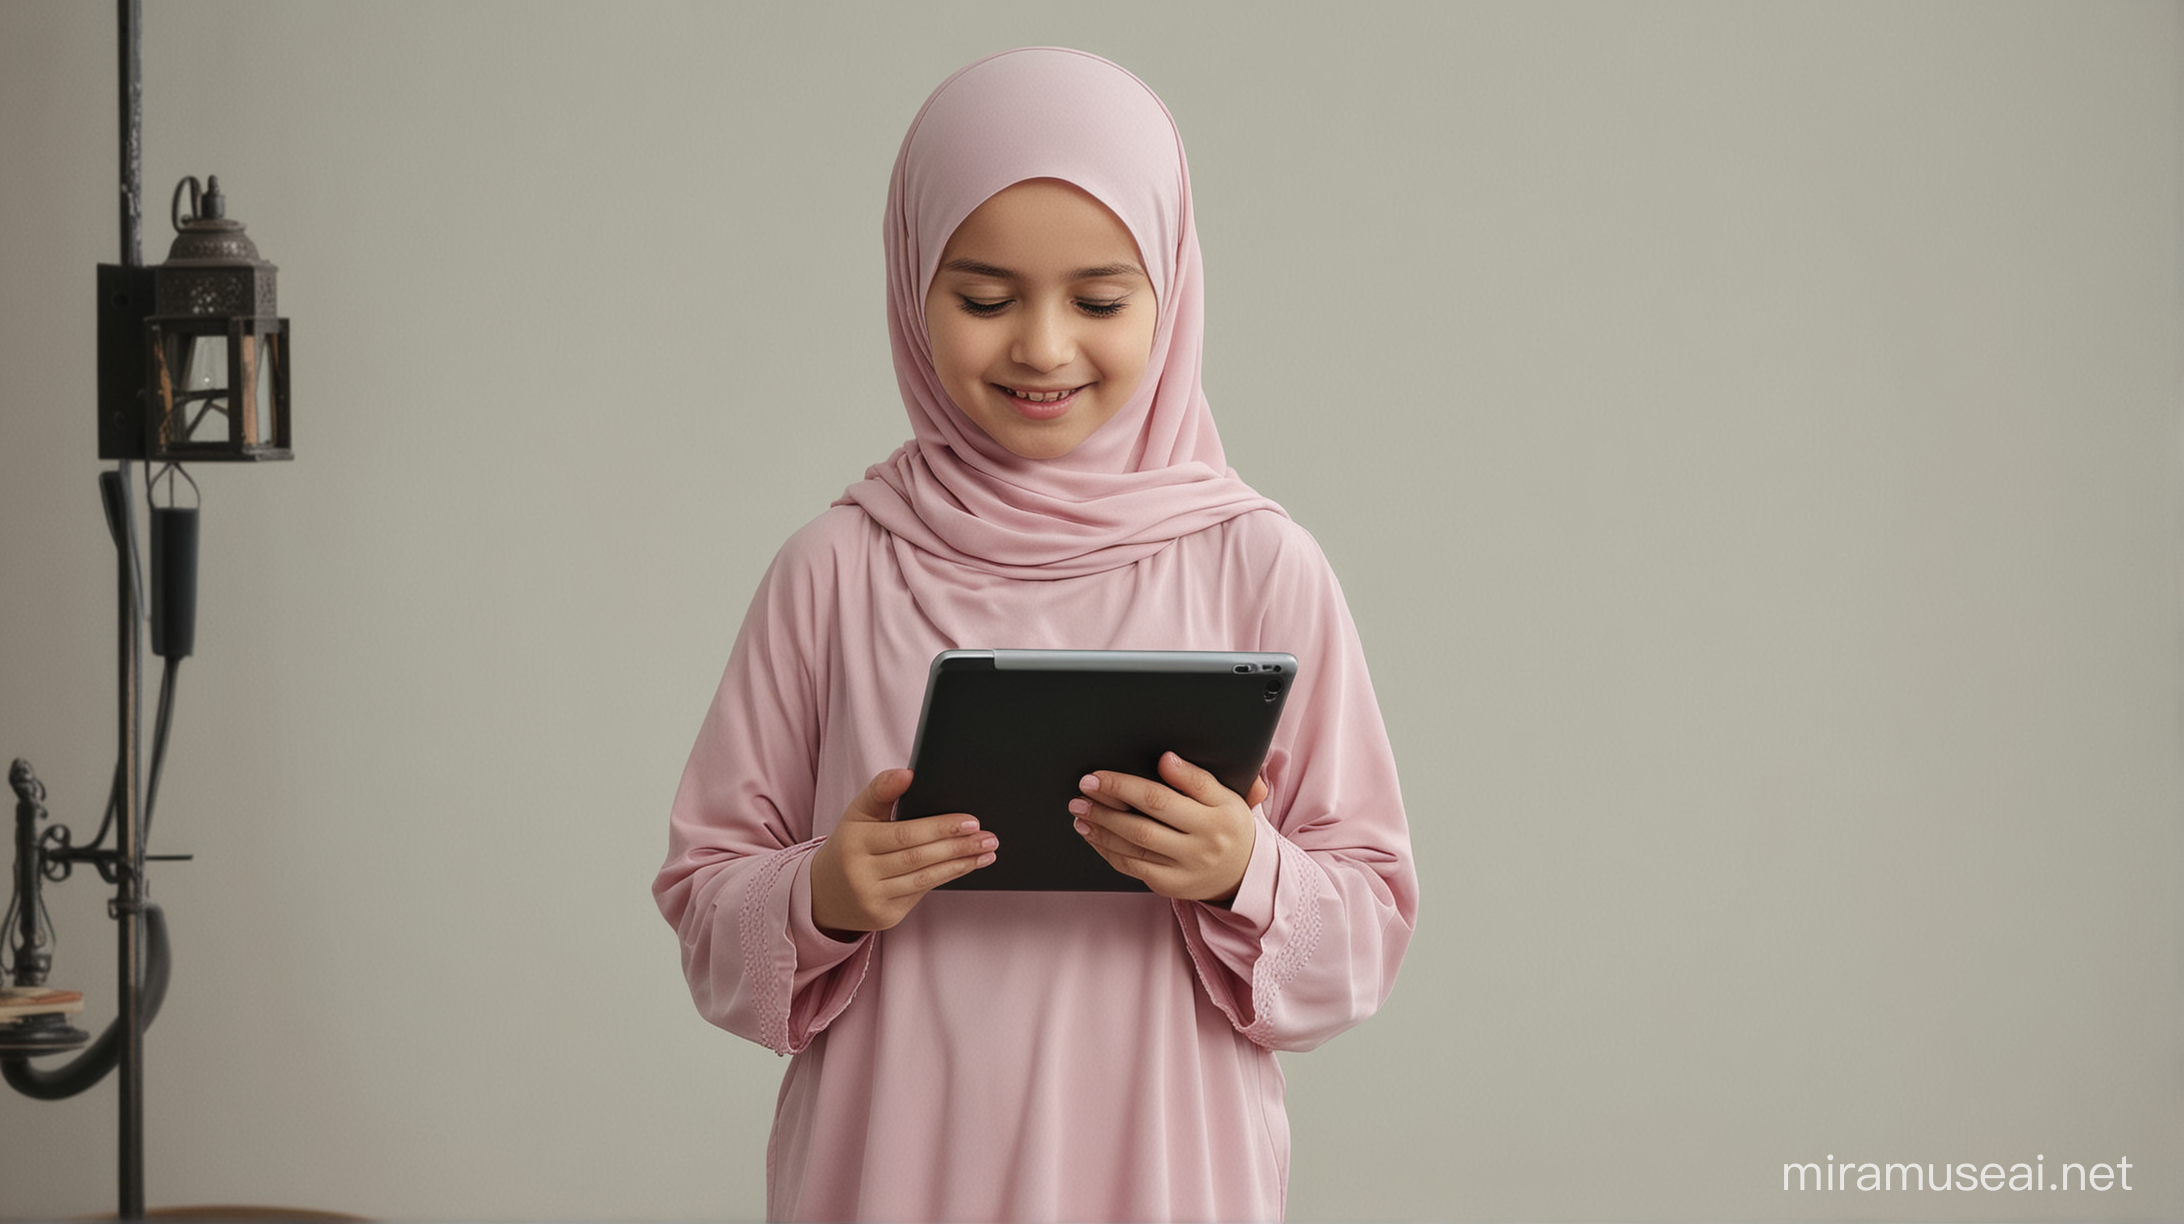 Online Islamic school
"muslim kid girl studying on ipad by standing"
